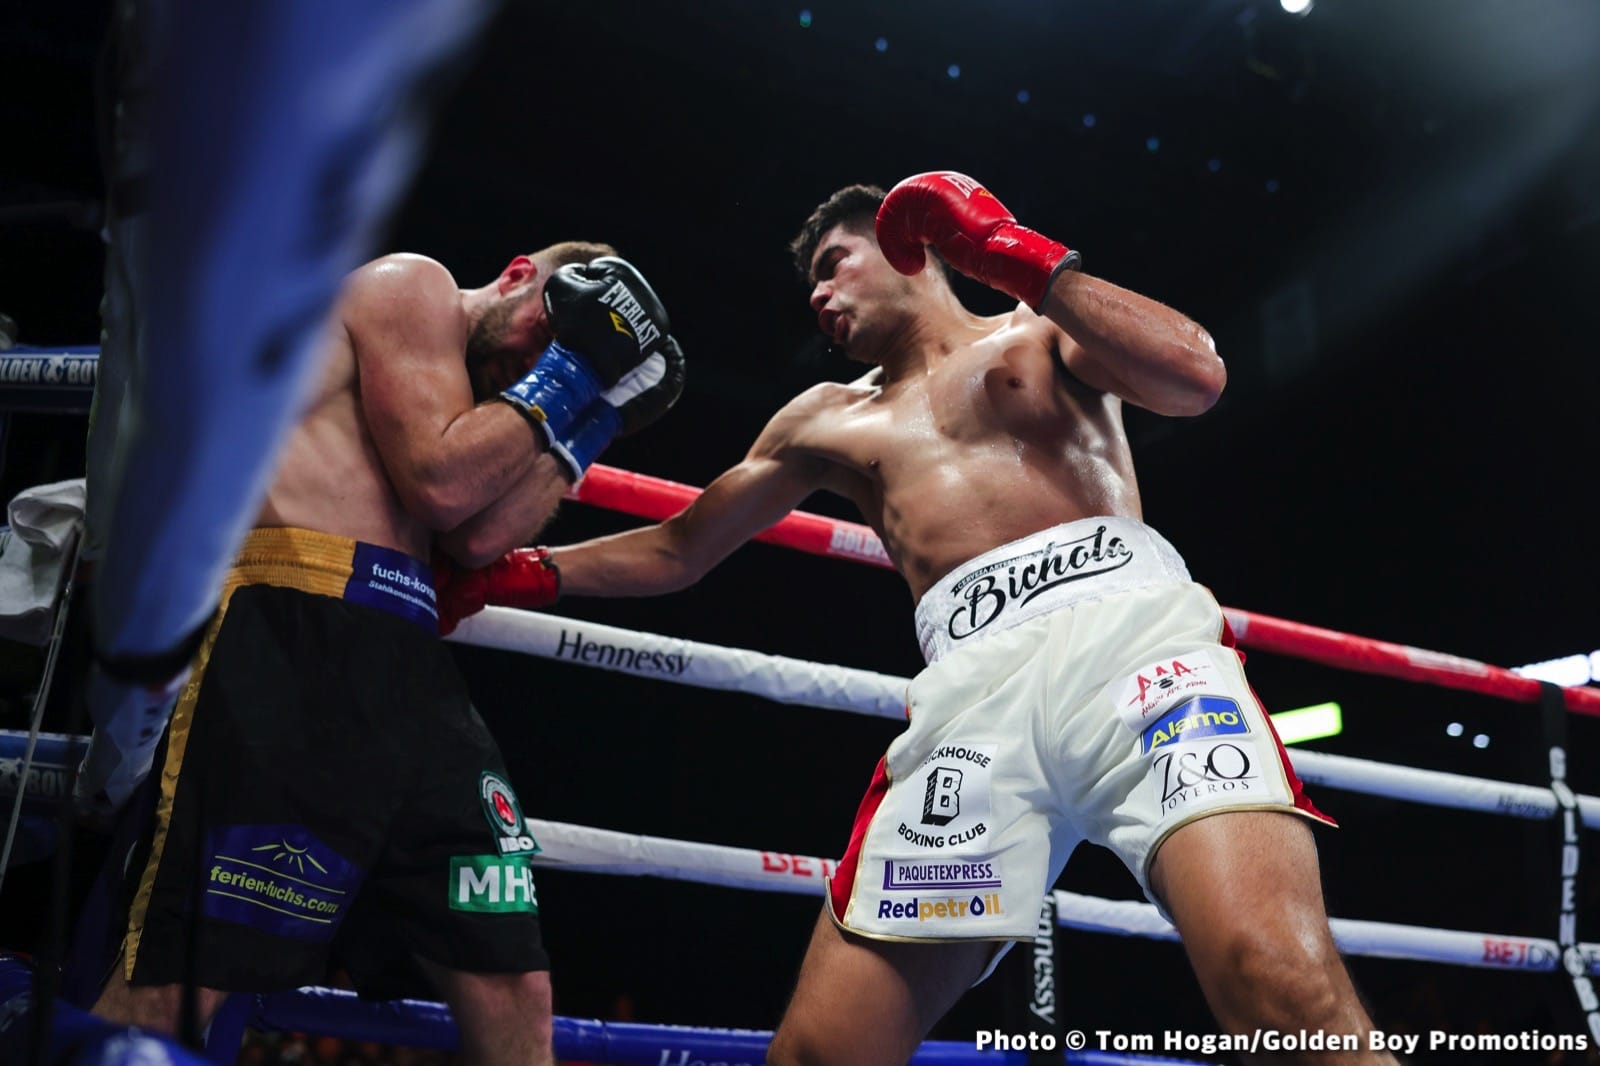 Dominic Boesel boxing image / photo